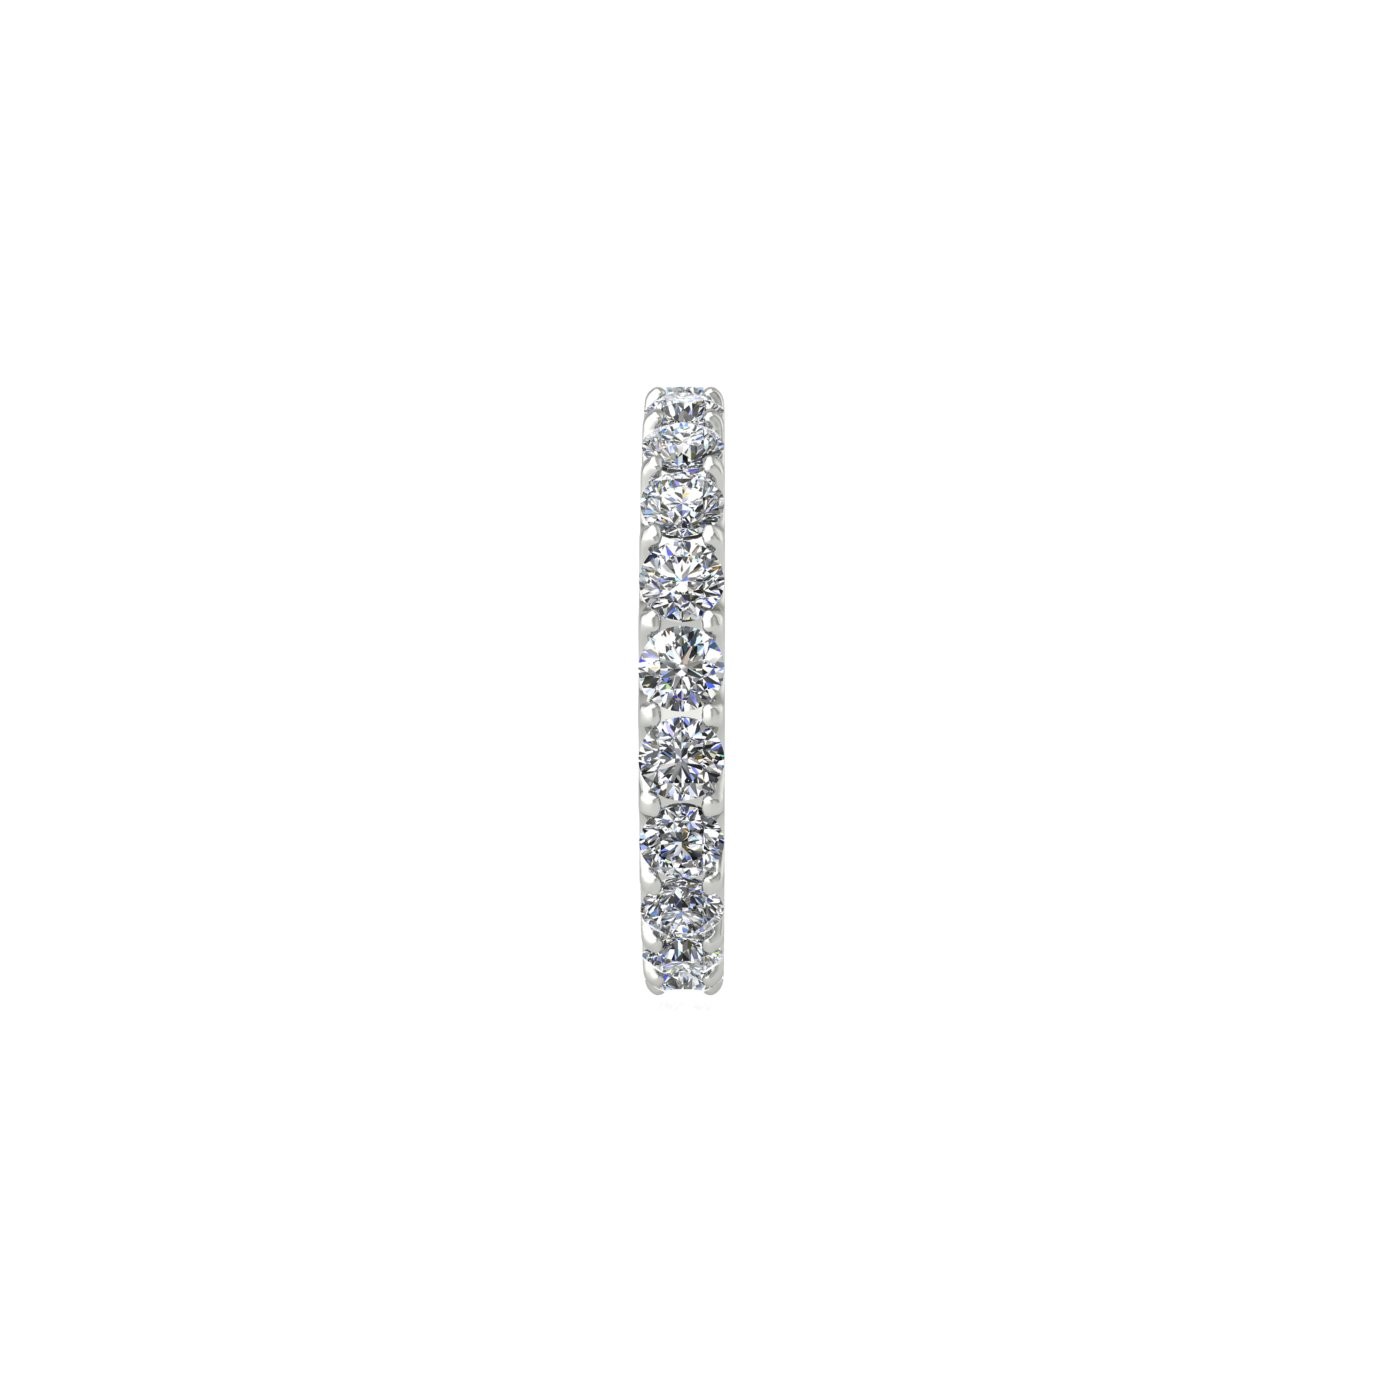 18k white gold  round shape diamond full eternity ring in u-prong setting